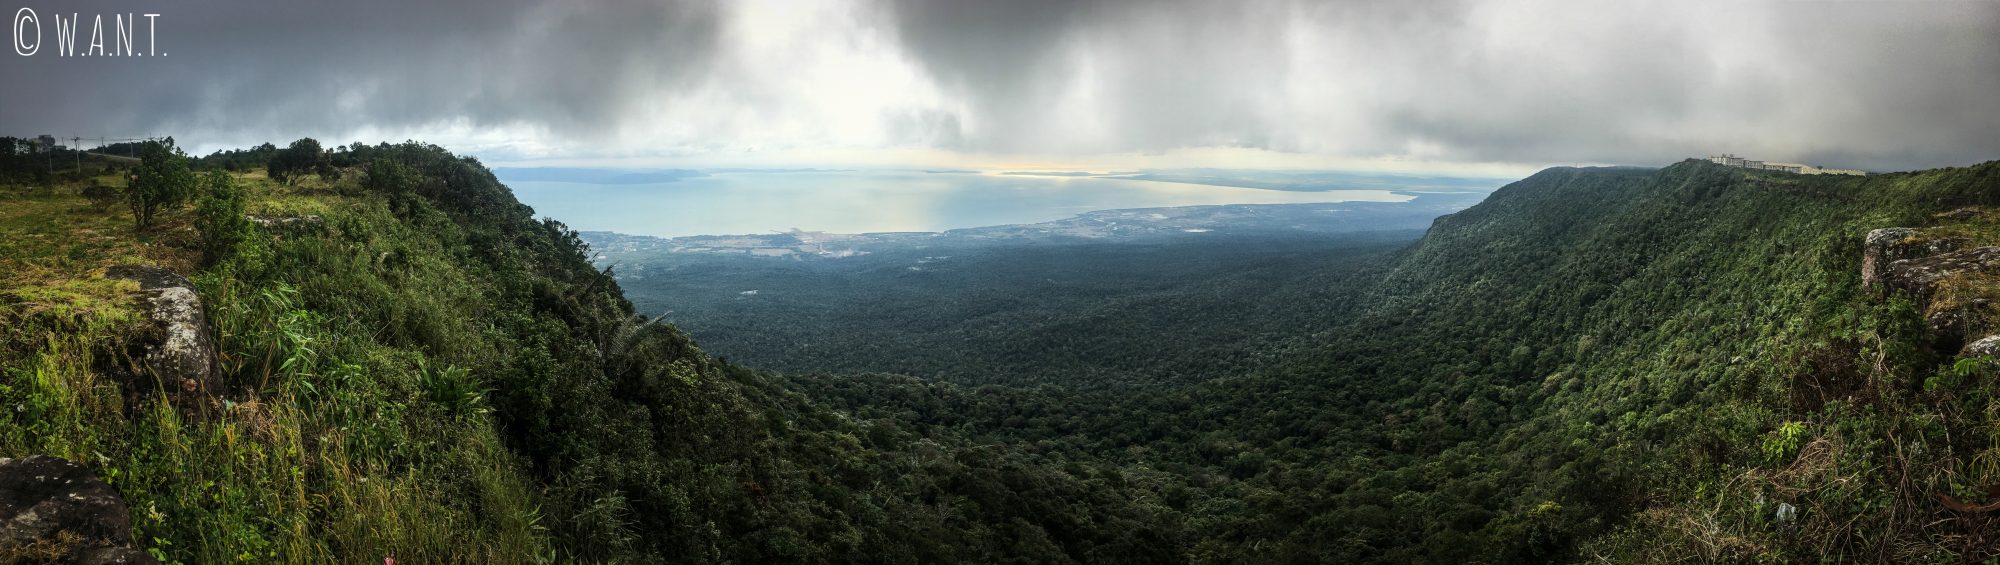 Panorama depuis Bokor Hill Station, en haut du Parc national de Bokor